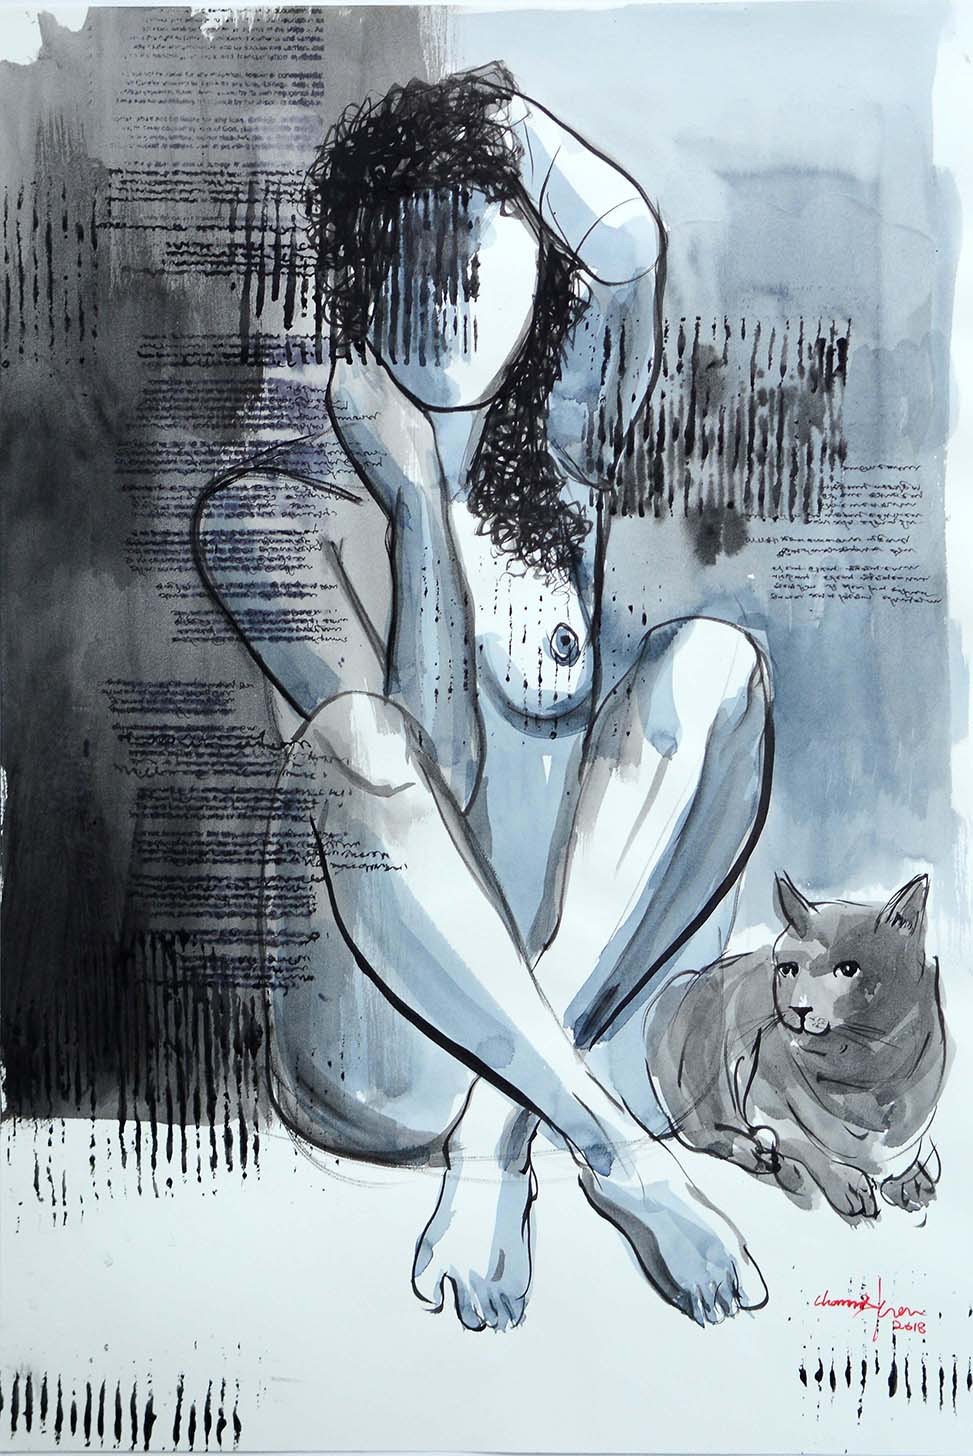 A GIRL WITH CAT by Chammika Jayawardena